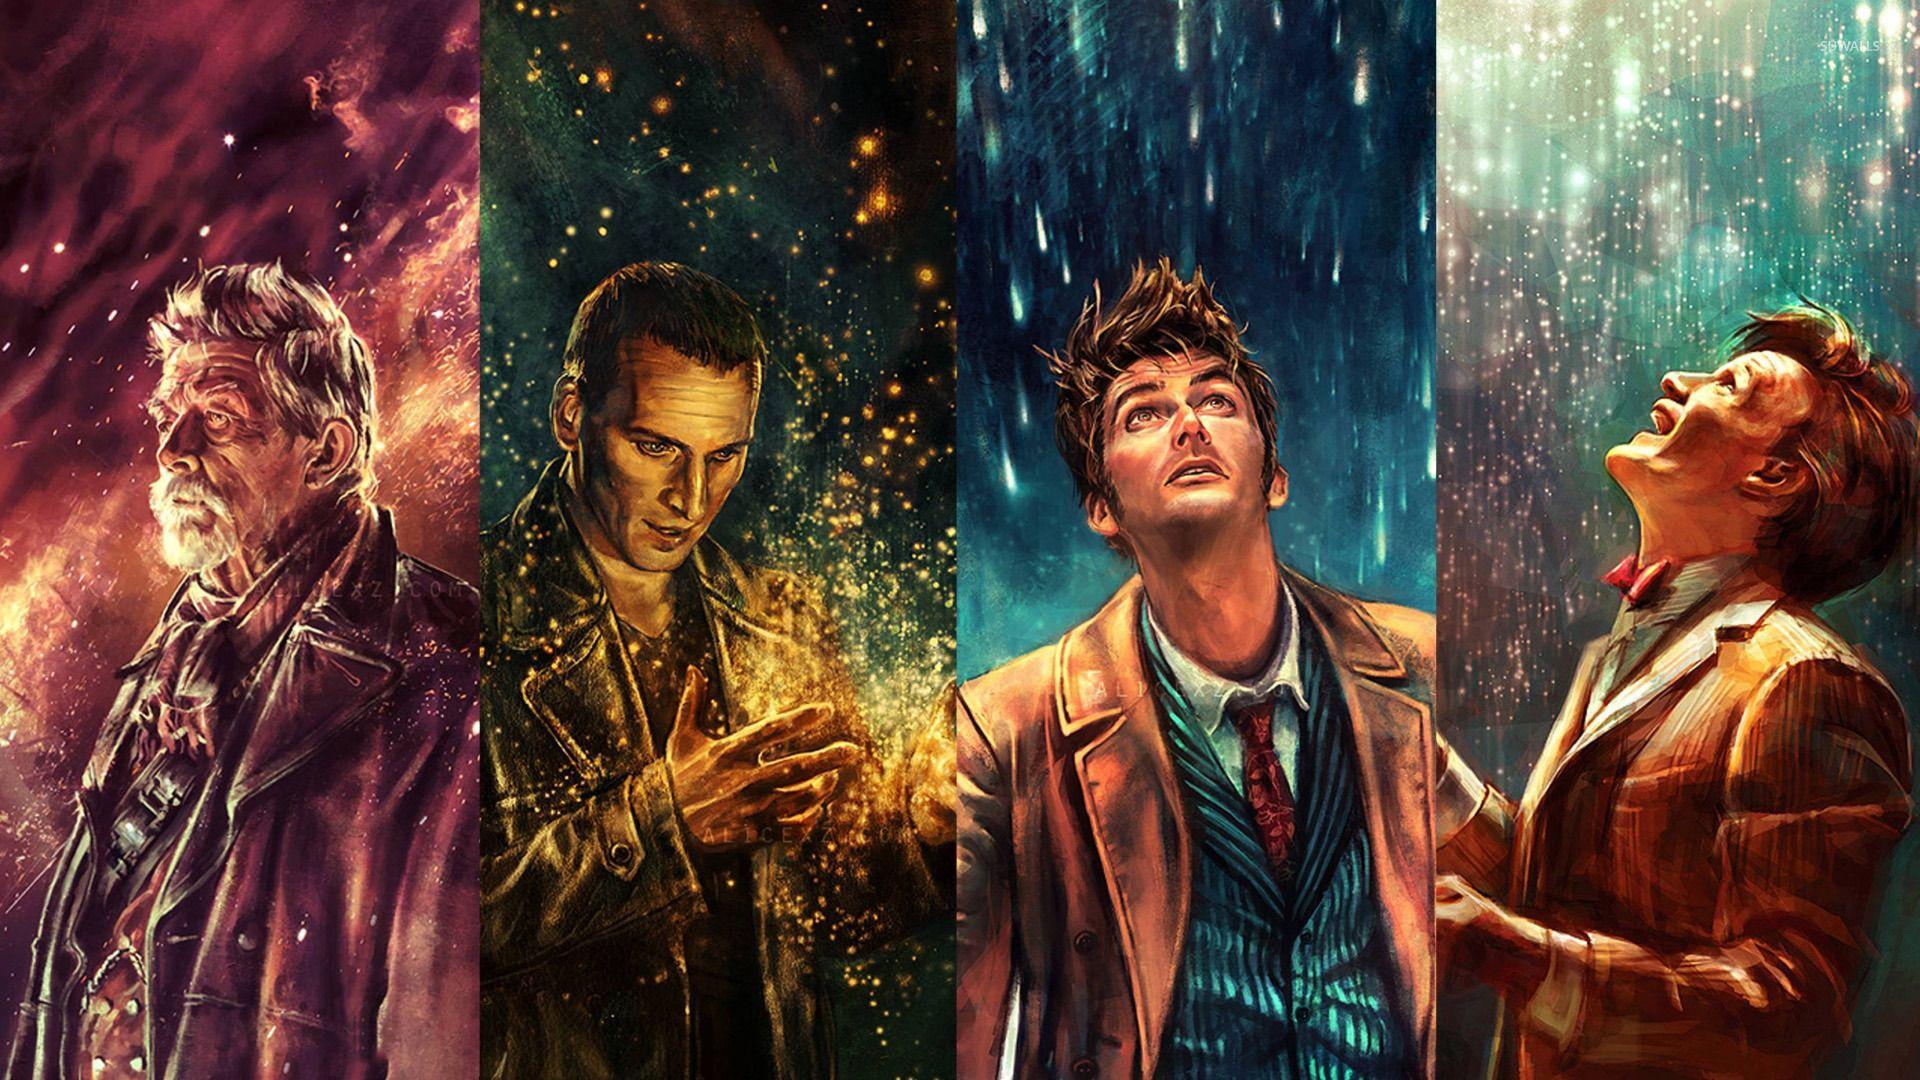 Doctor Who [7] wallpaper Show wallpaper